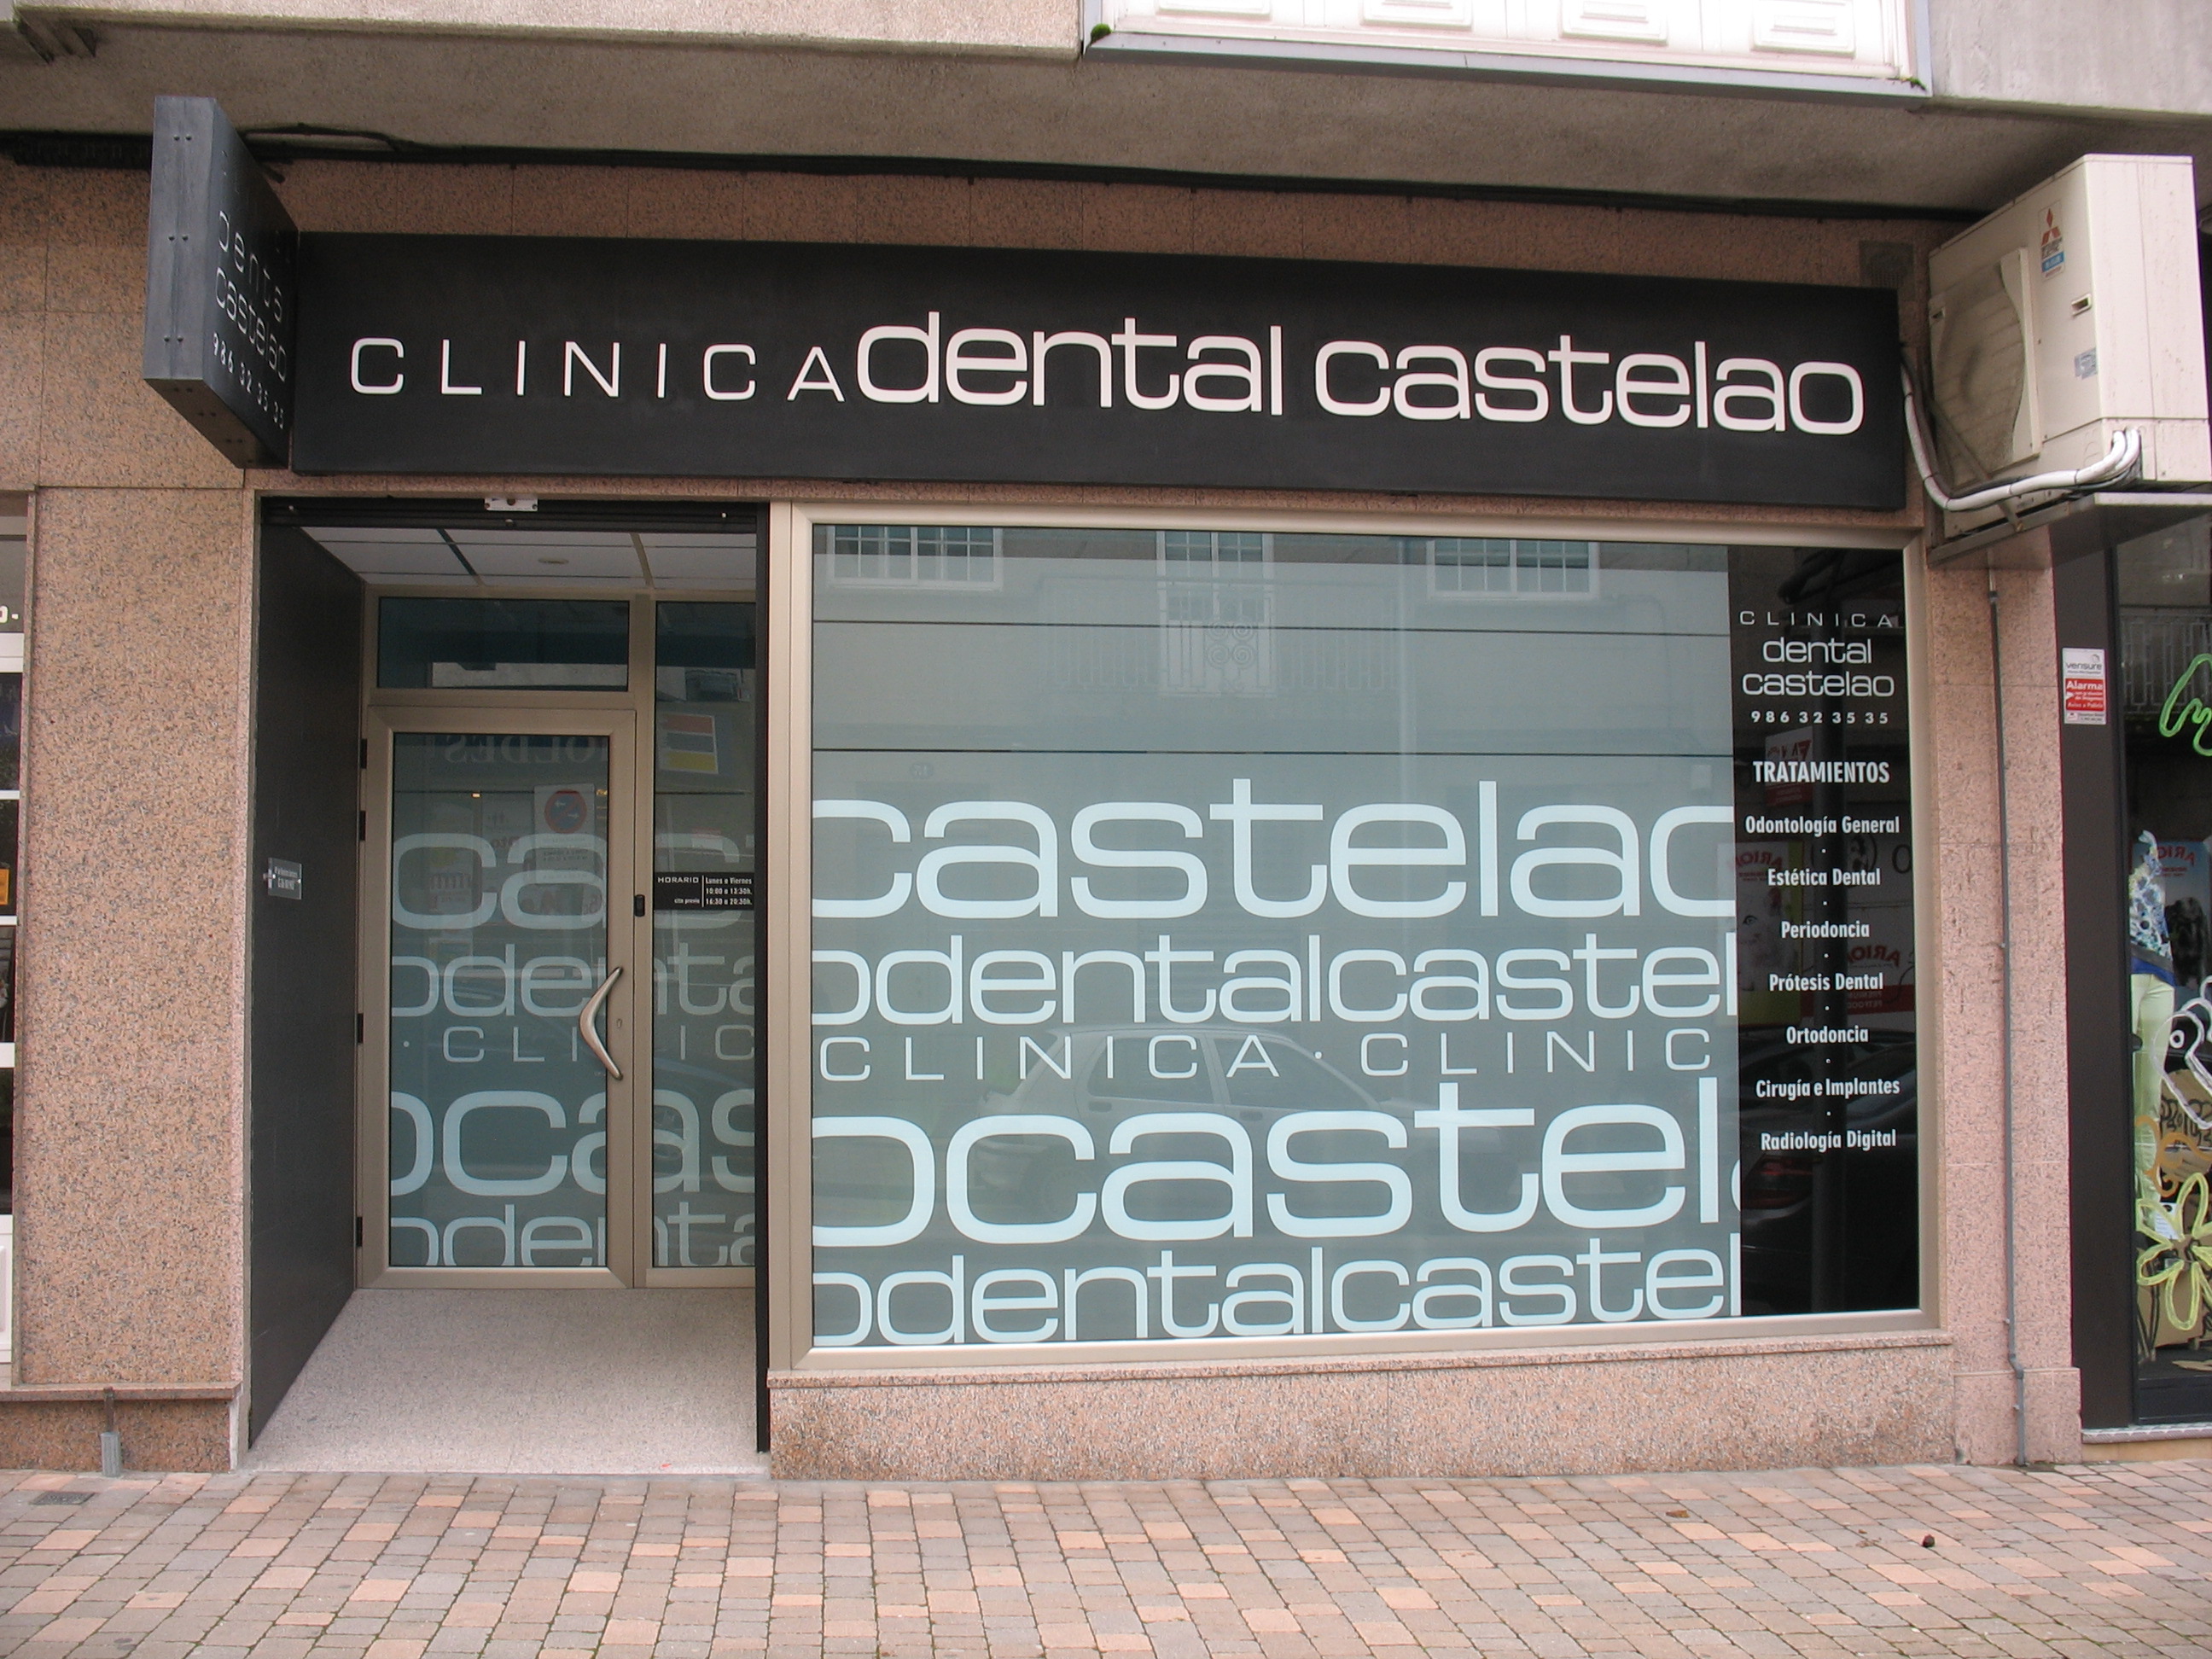 Clínica Dental Castelao Bueu